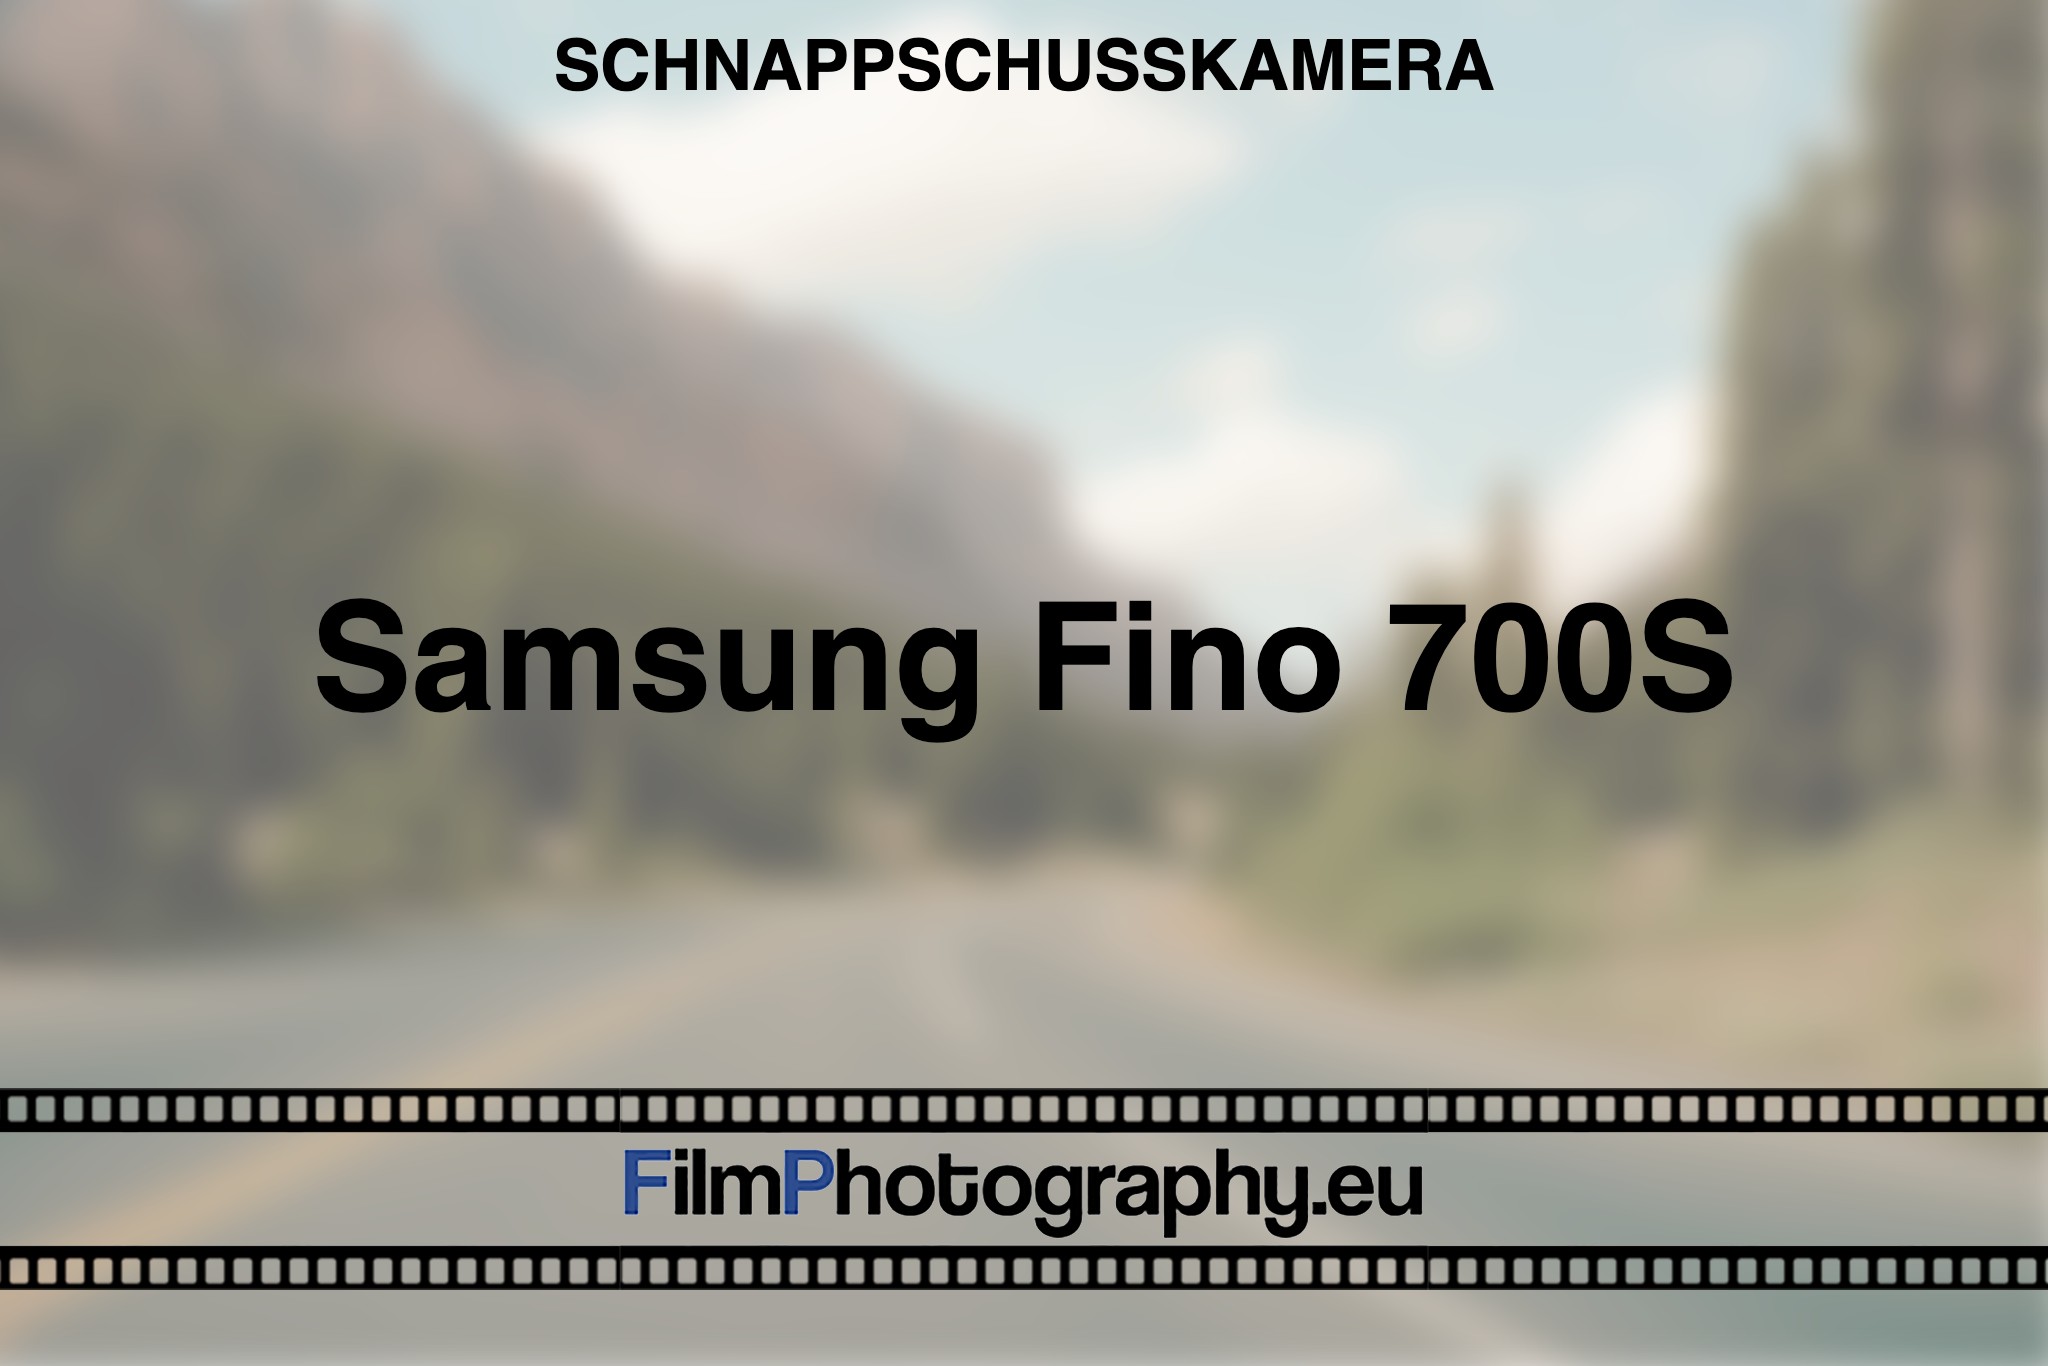 samsung-fino-700s-schnappschusskamera-bnv